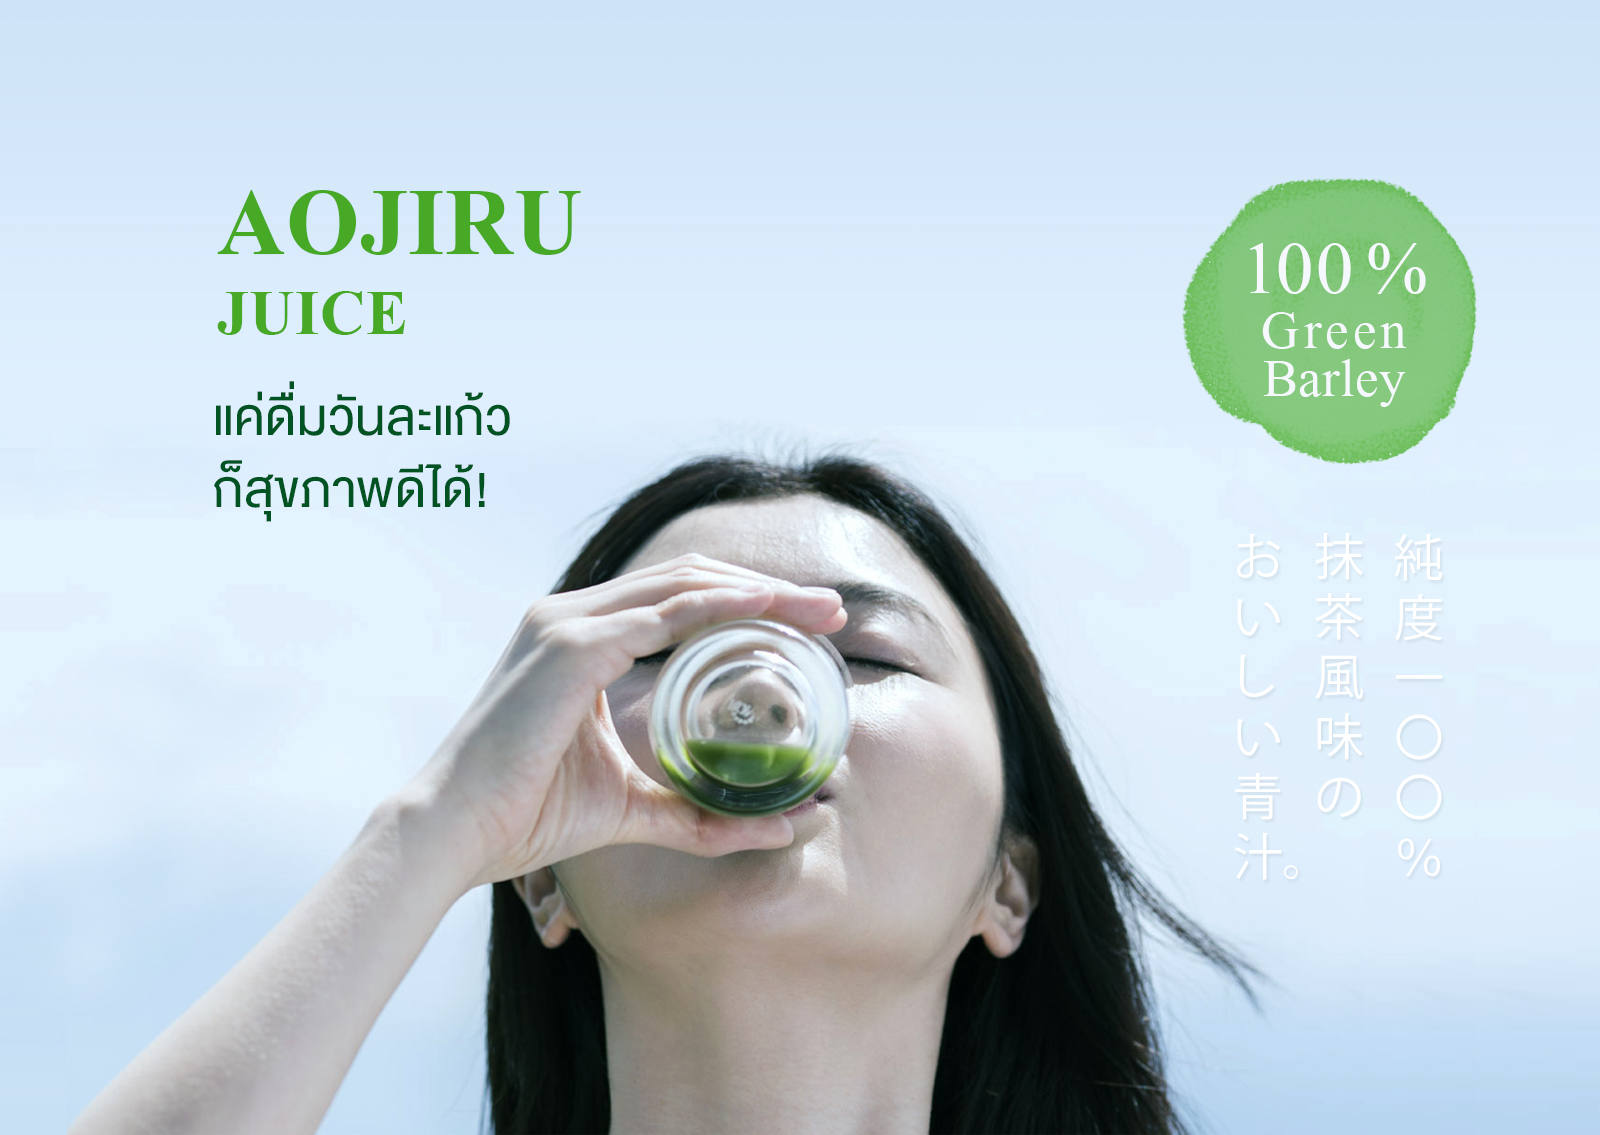 AOJIRU JUICE แค่ดื่มวันละแก้ว ก็สุขภาพดีได้! 100 % Green Barley